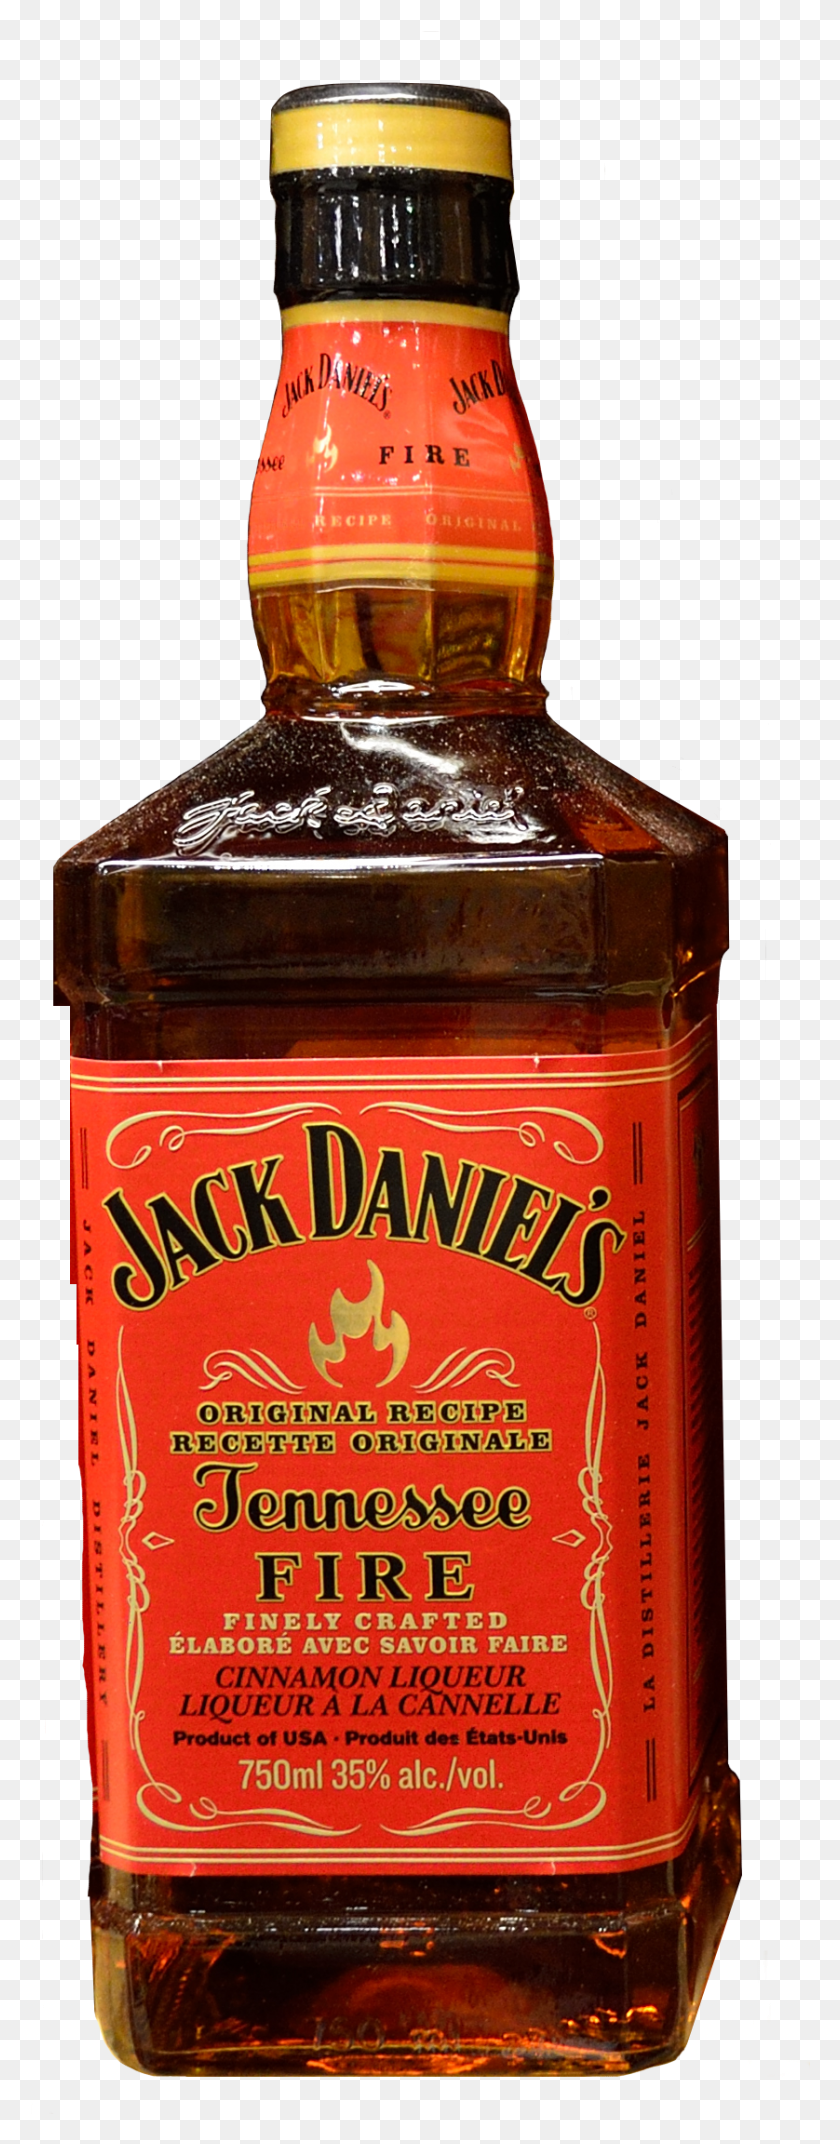 838x2240 Jackdaniels Fire Extracted Виски Теннесси, Ликер, Алкоголь, Напитки Hd Png Скачать